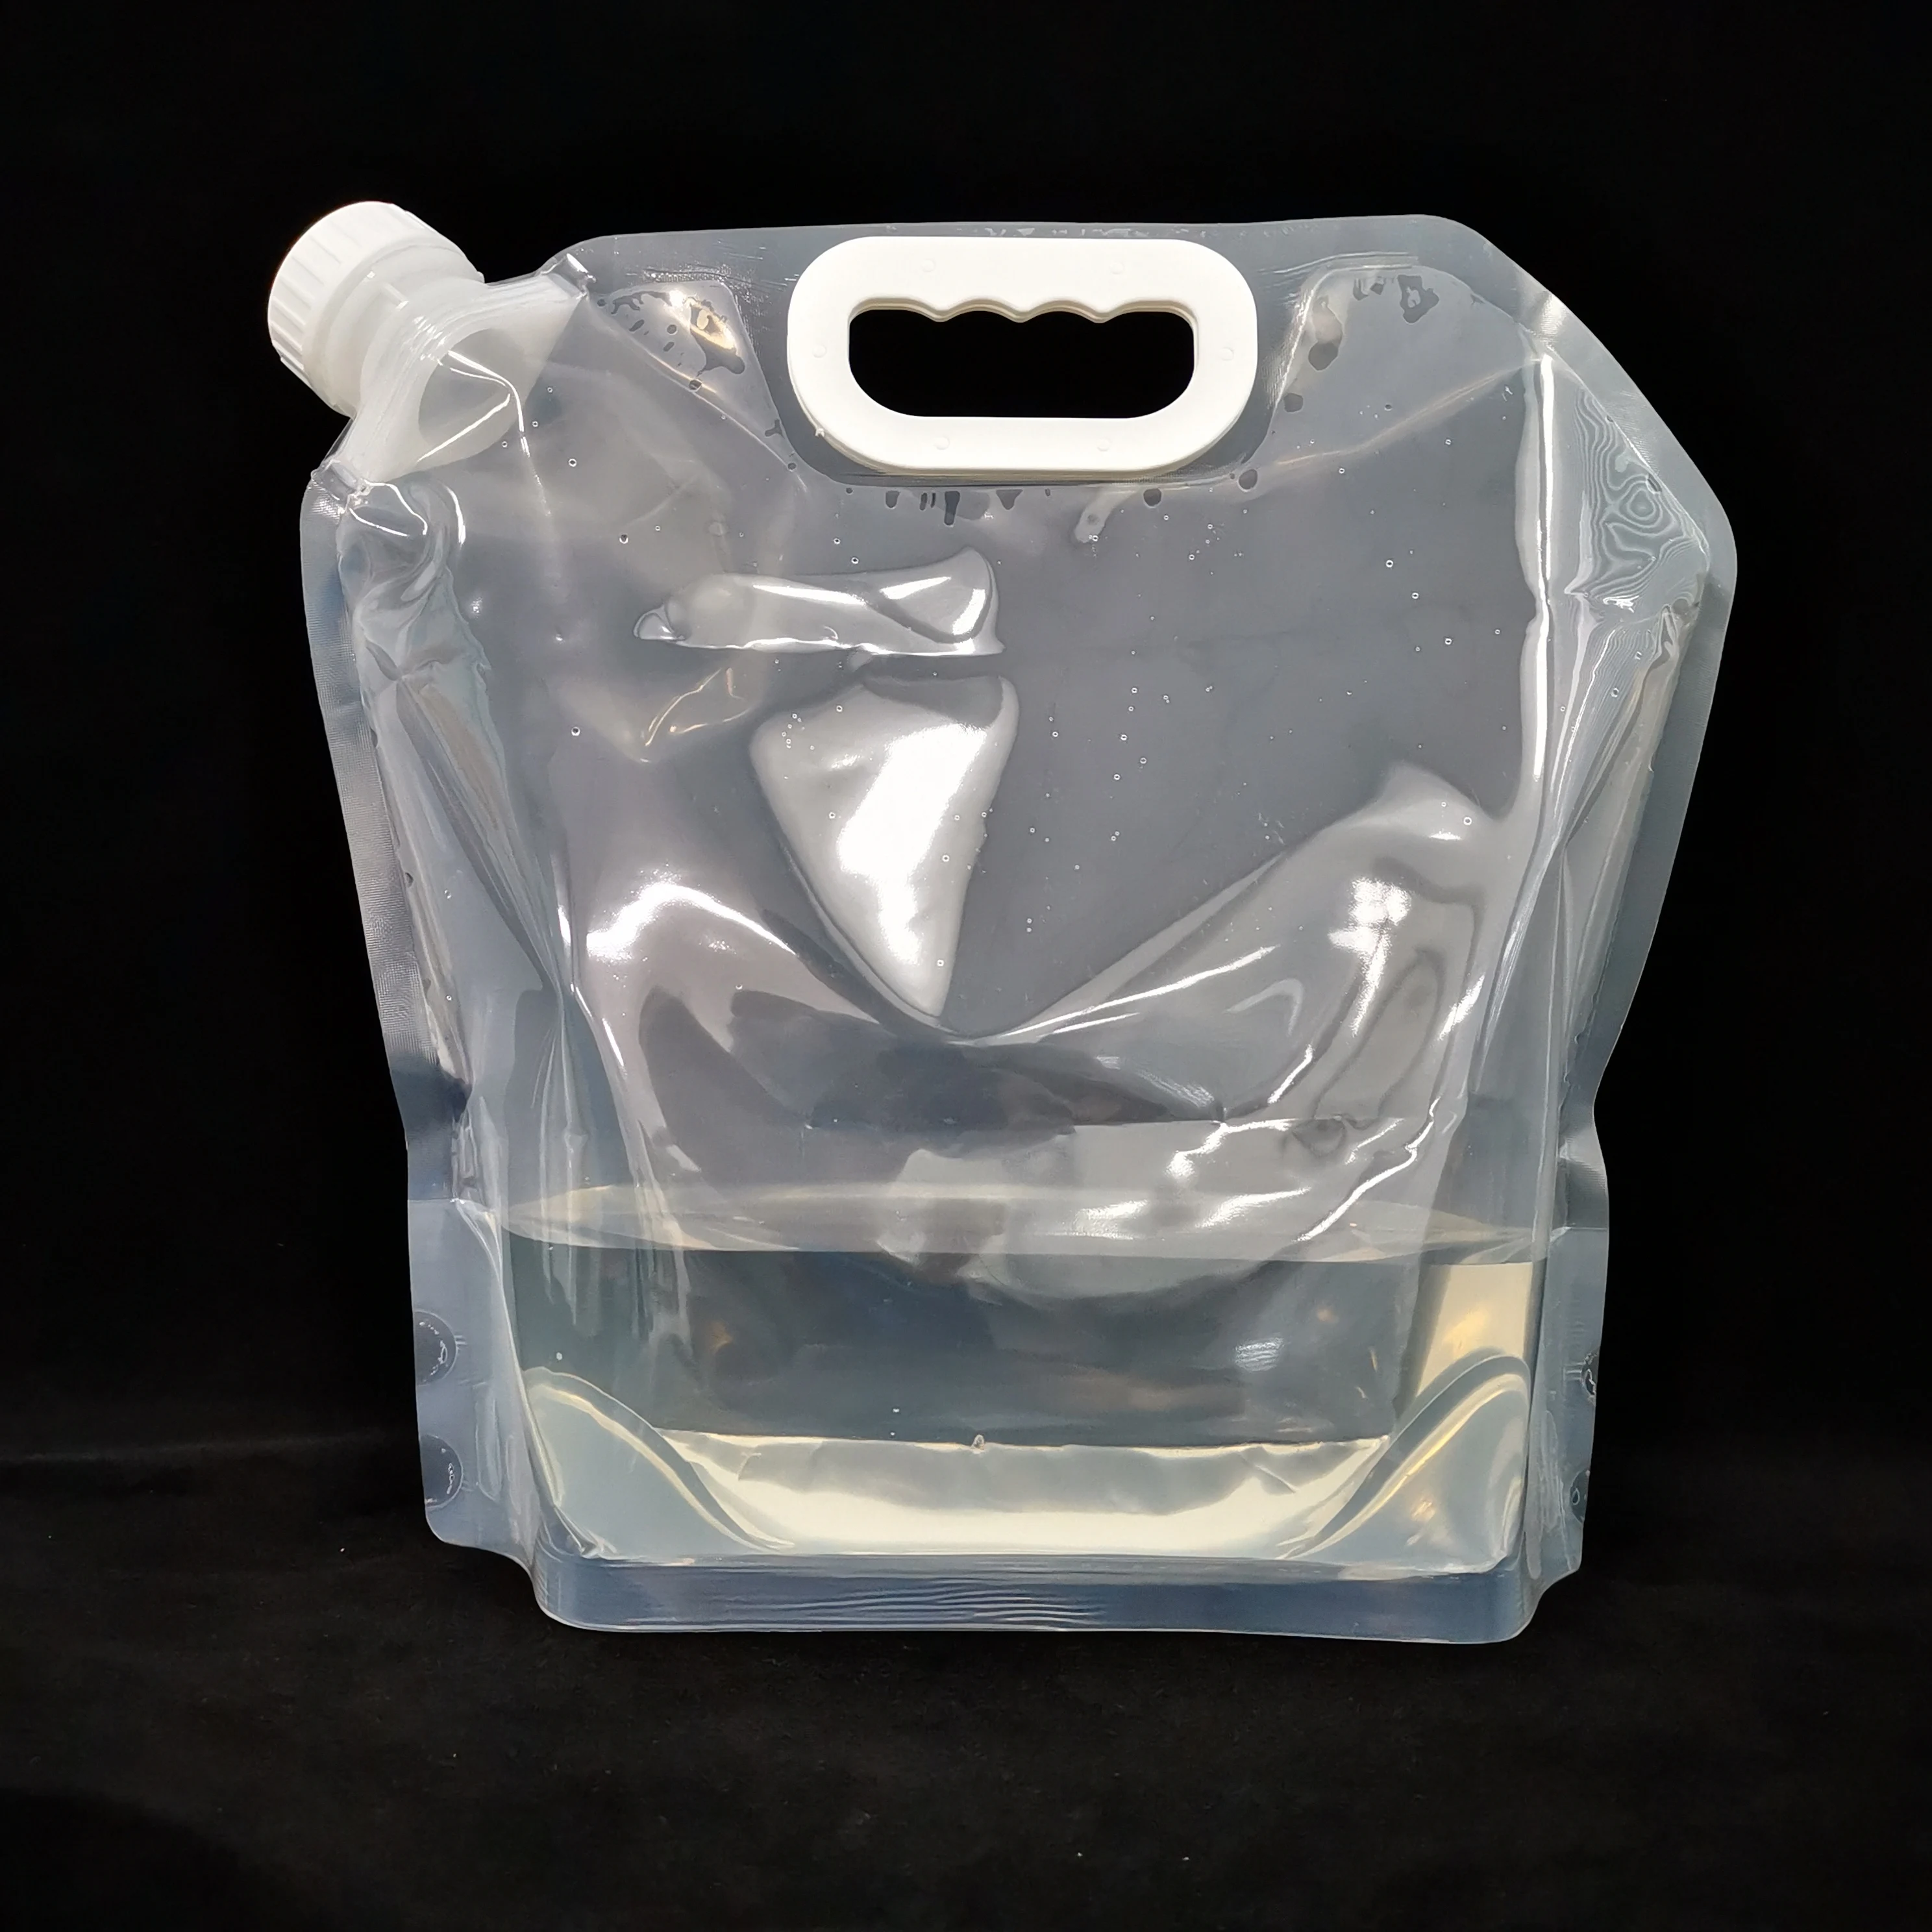 Custom Printed 5 Liter Foldable Plastic Water Container - Buy 5 Liter ...